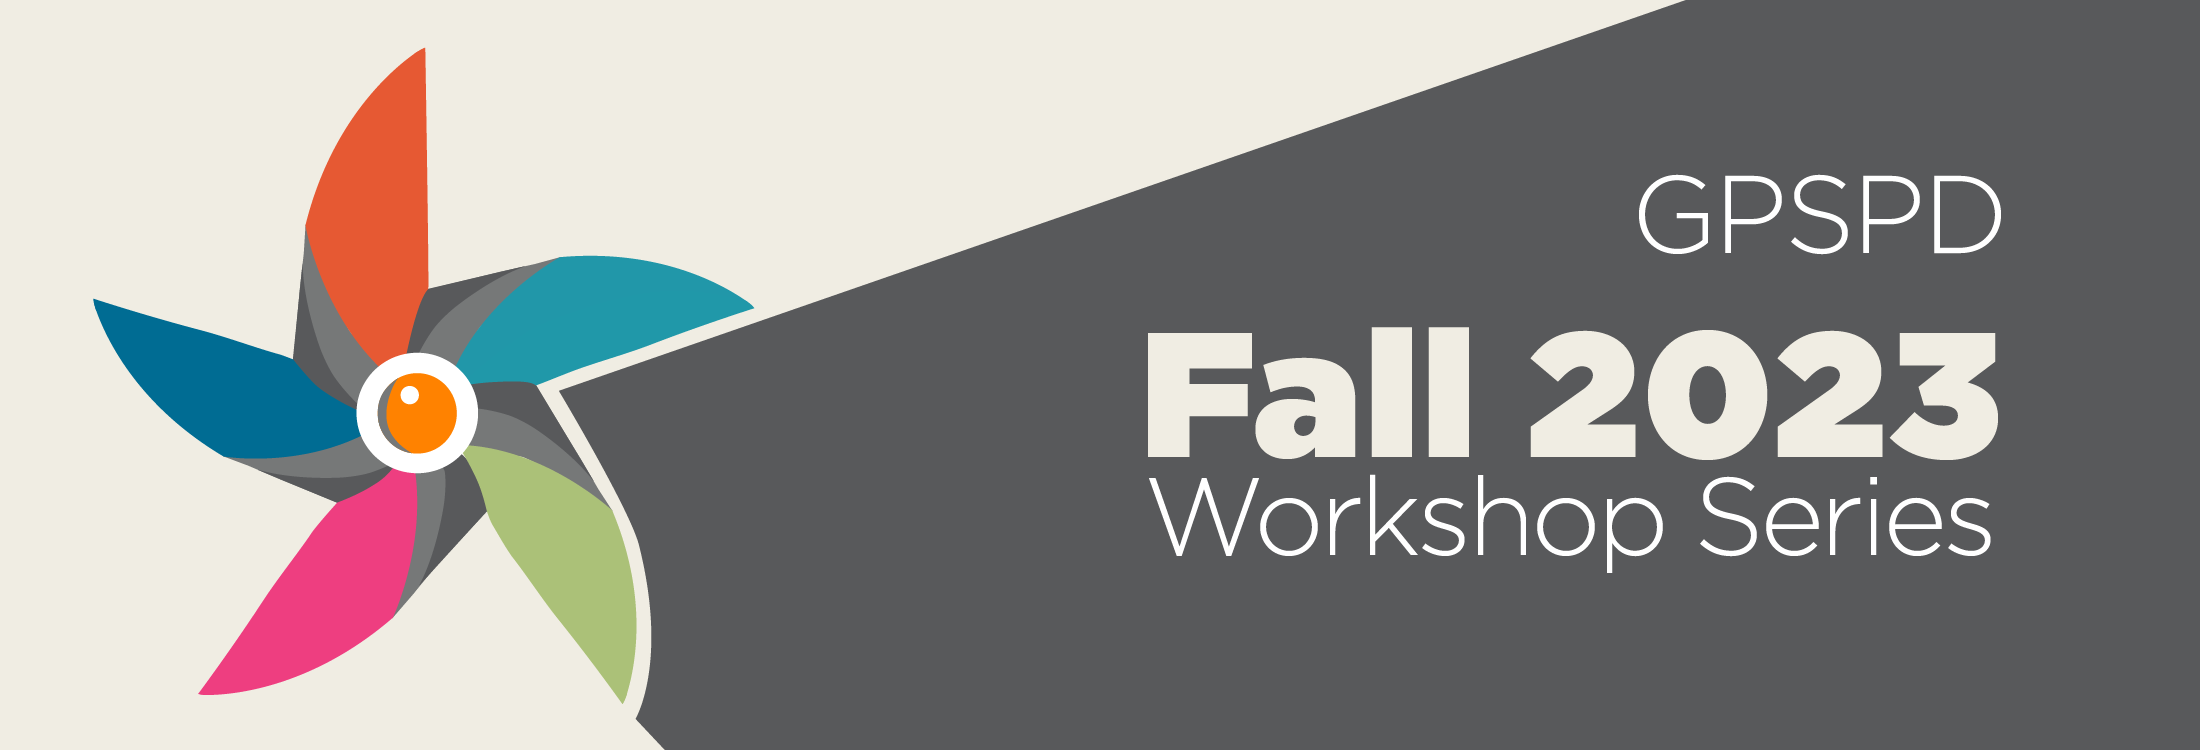 GPSPD Fall 2023 Workshop Series